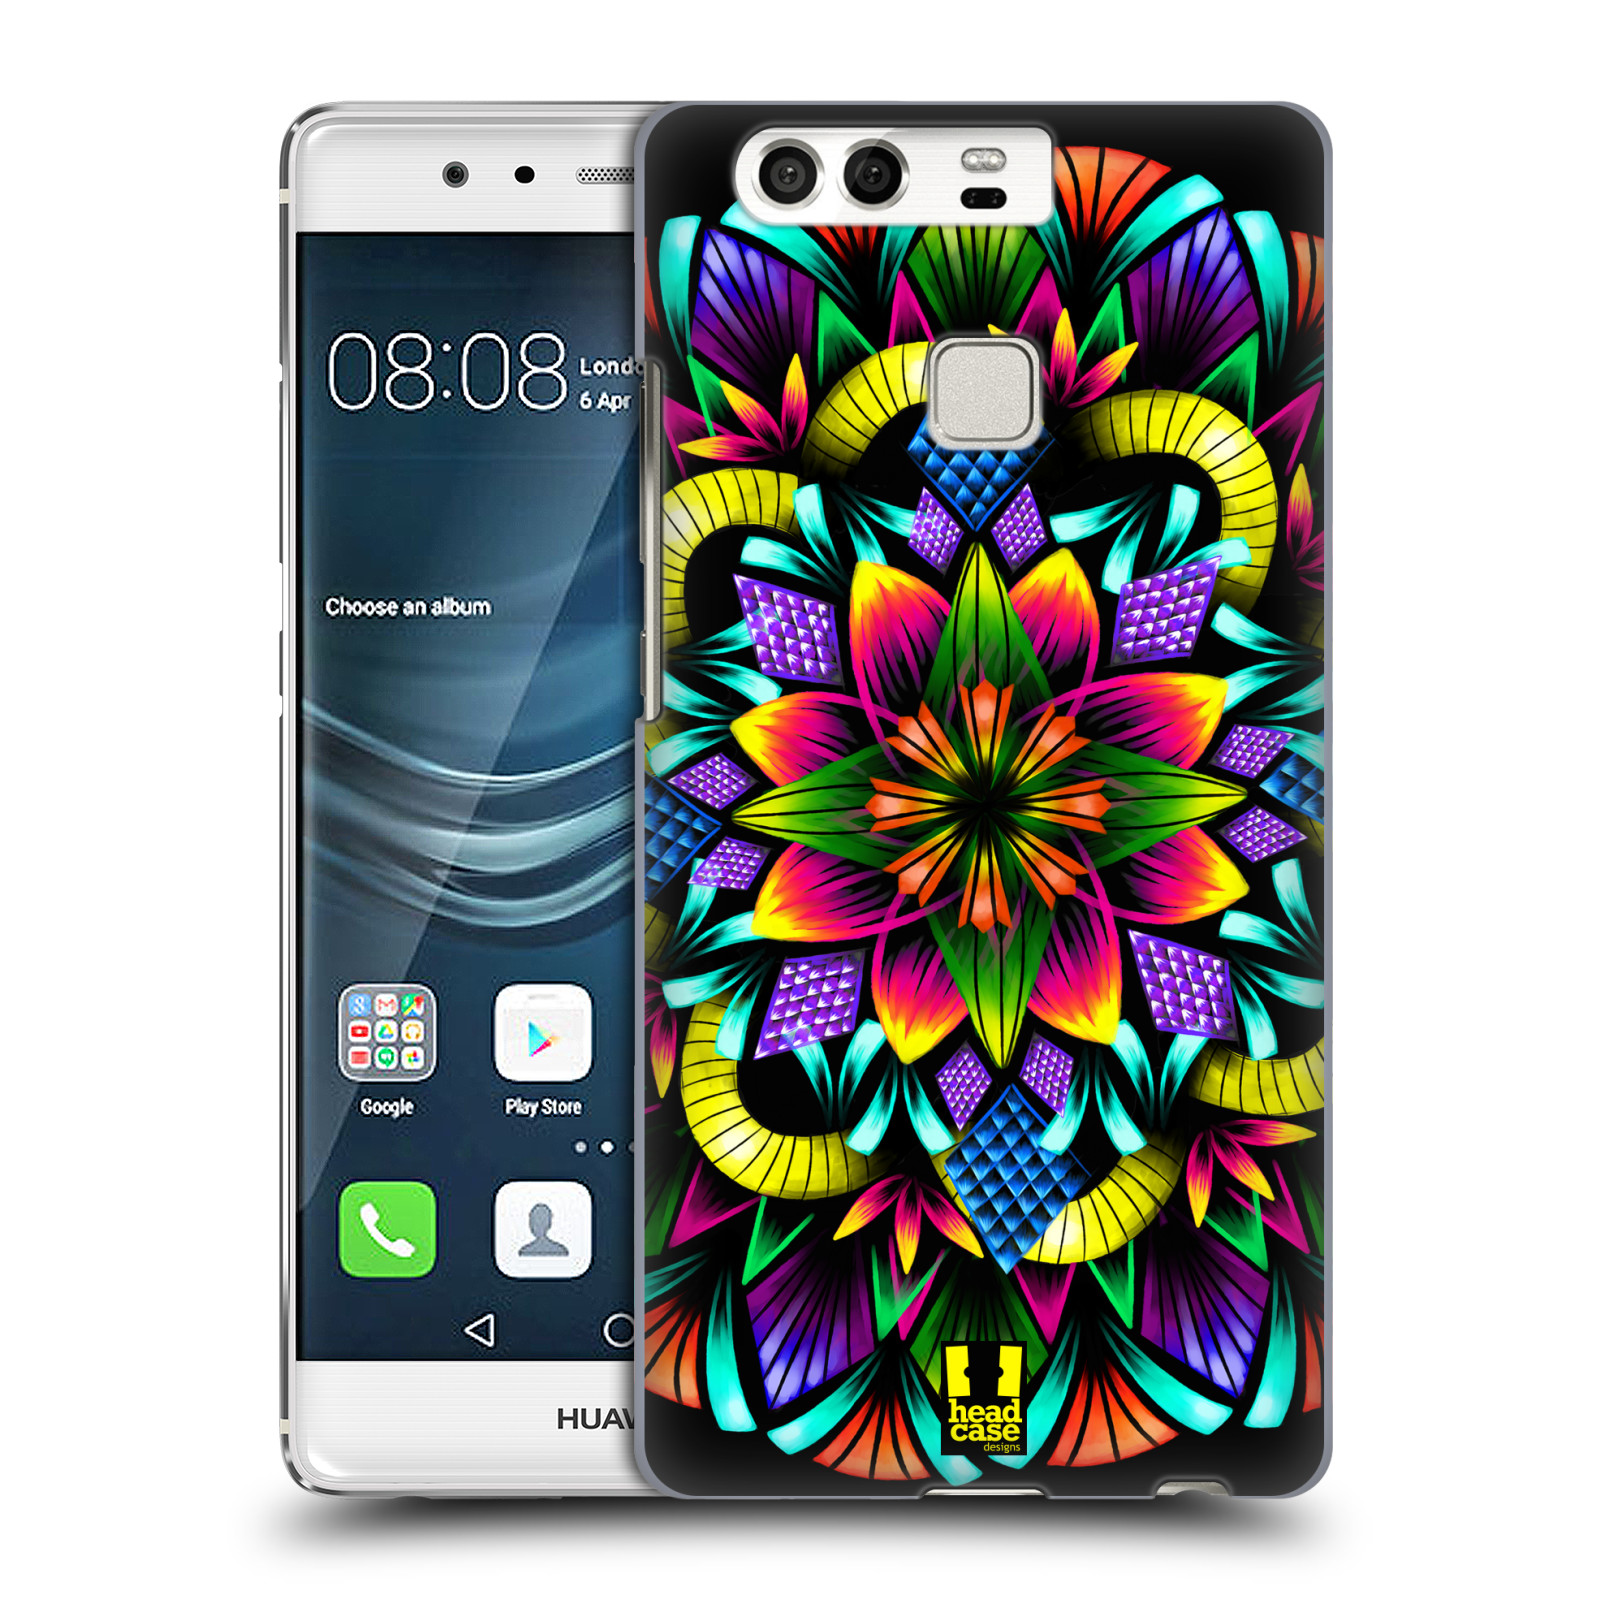 HEAD CASE plastový obal na mobil Huawei P9 / P9 DUAL SIM vzor Indie Mandala kaleidoskop barevný vzor KVĚTINA